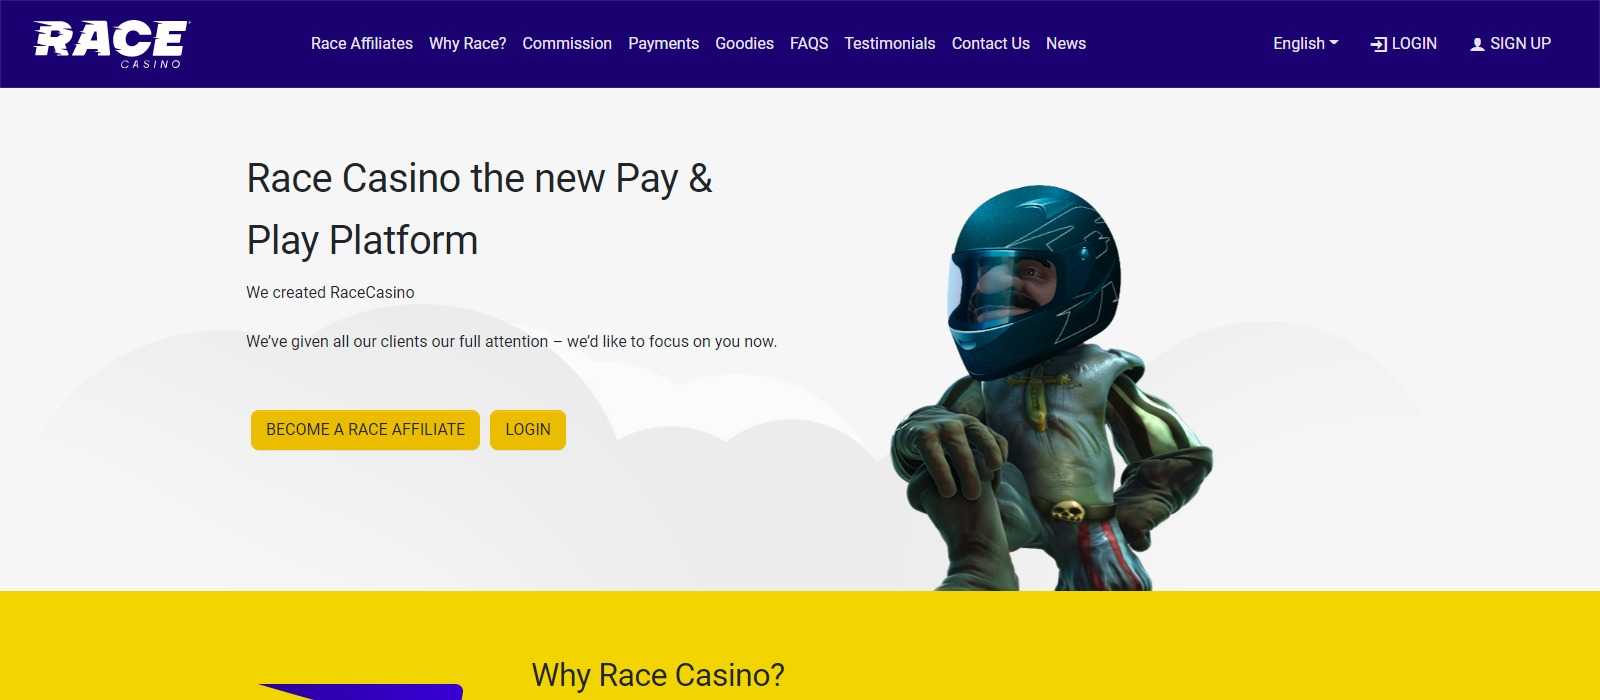 Race Casino Affiliates Program Review: Earn 25% - 40% Recurring Revenue Share